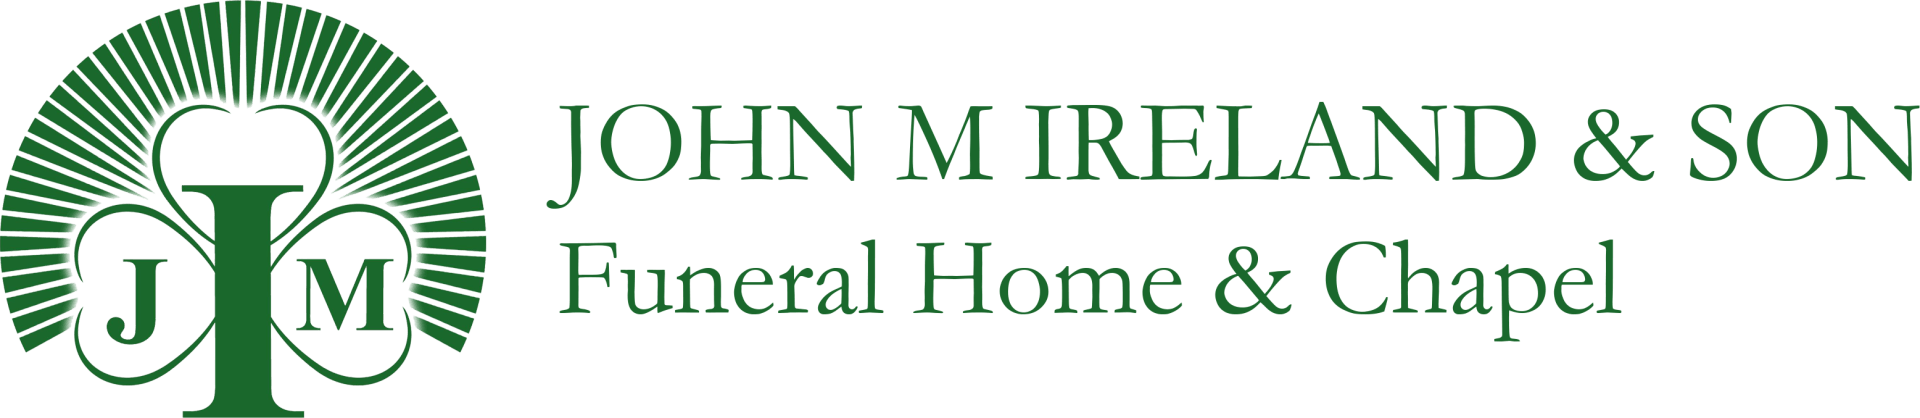 John M Ireland & Son Funeral Home & Chapel logo